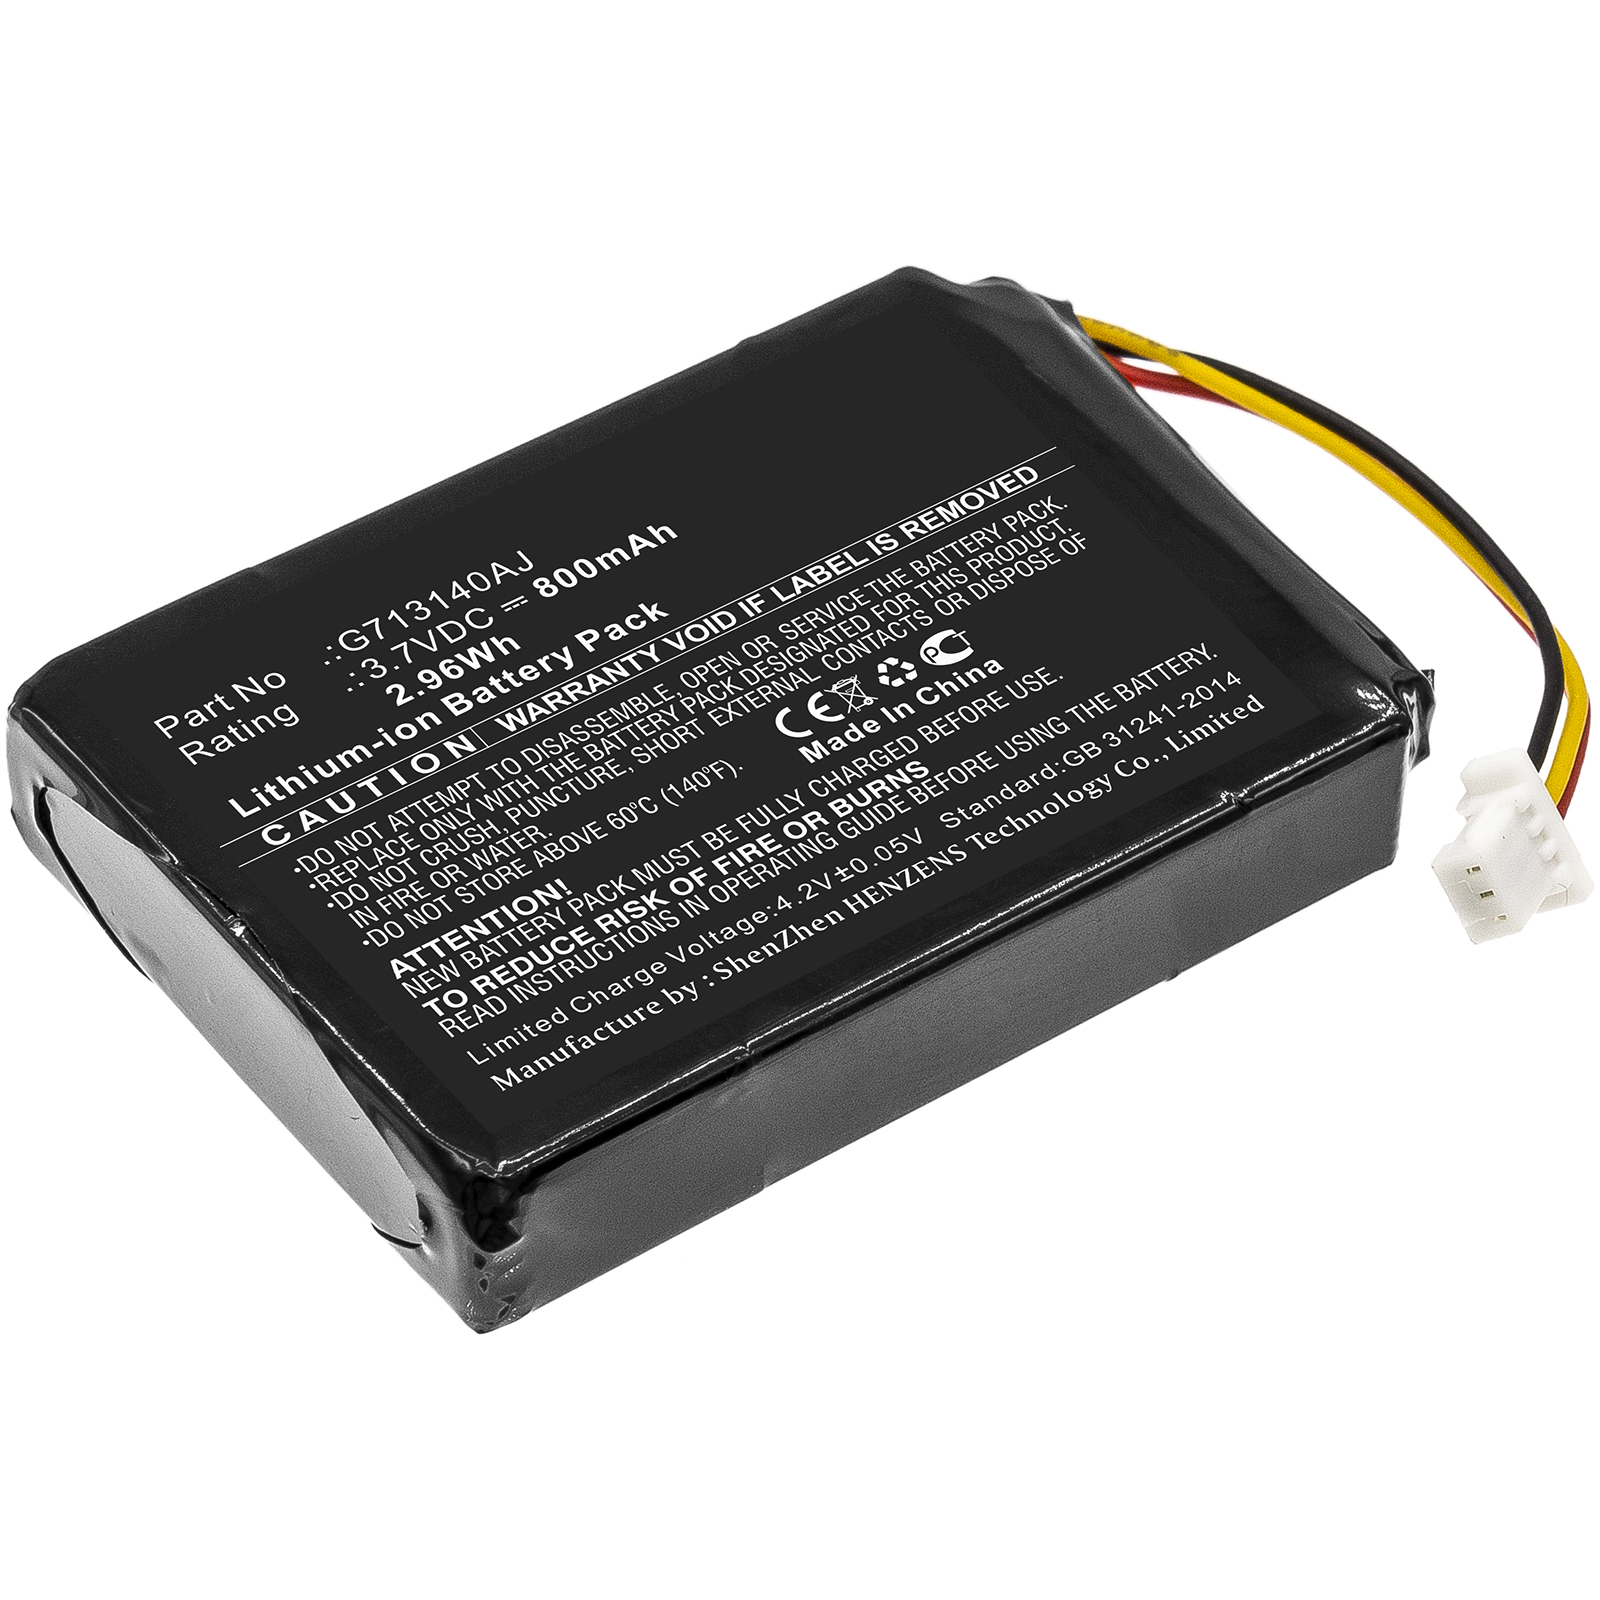 Synergy Digital Home Security Camera Battery, Compatible with Flir G713140AJ Home Security Camera Battery (3.7V, Li-ion, 800mAh)